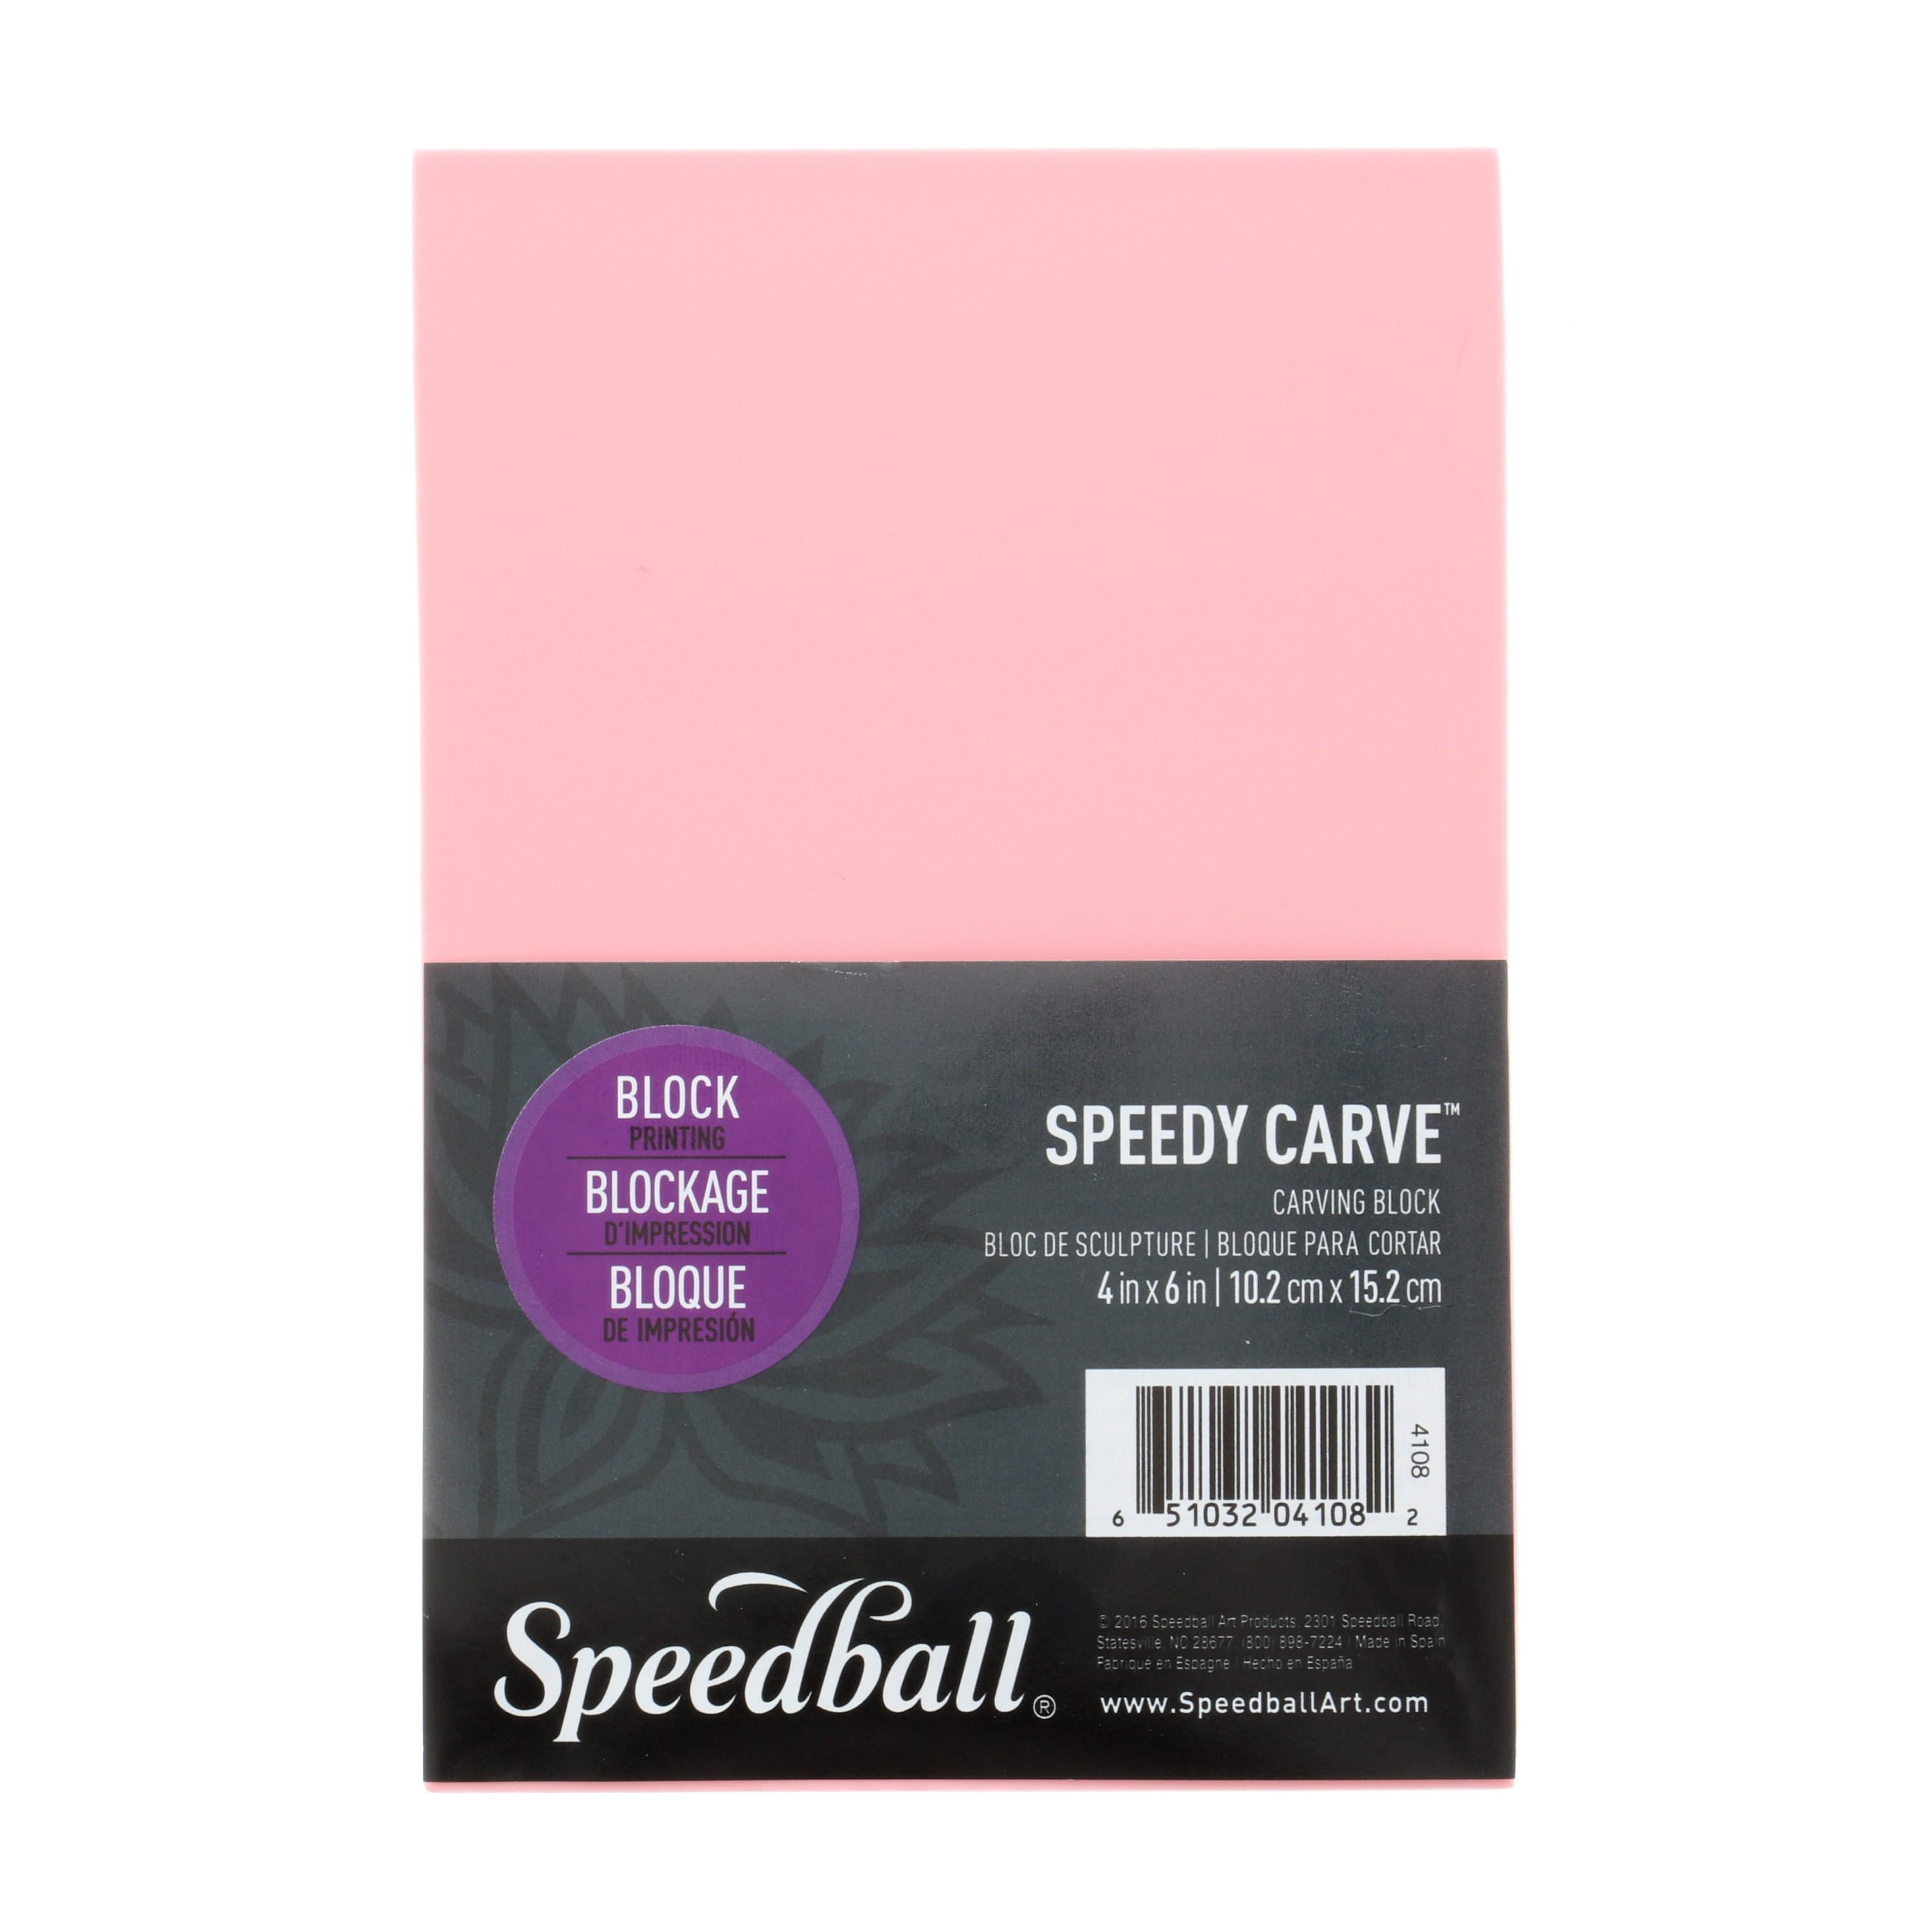 Speedball Speedy-Carve Block, 4" x 6" - image 1 of 3